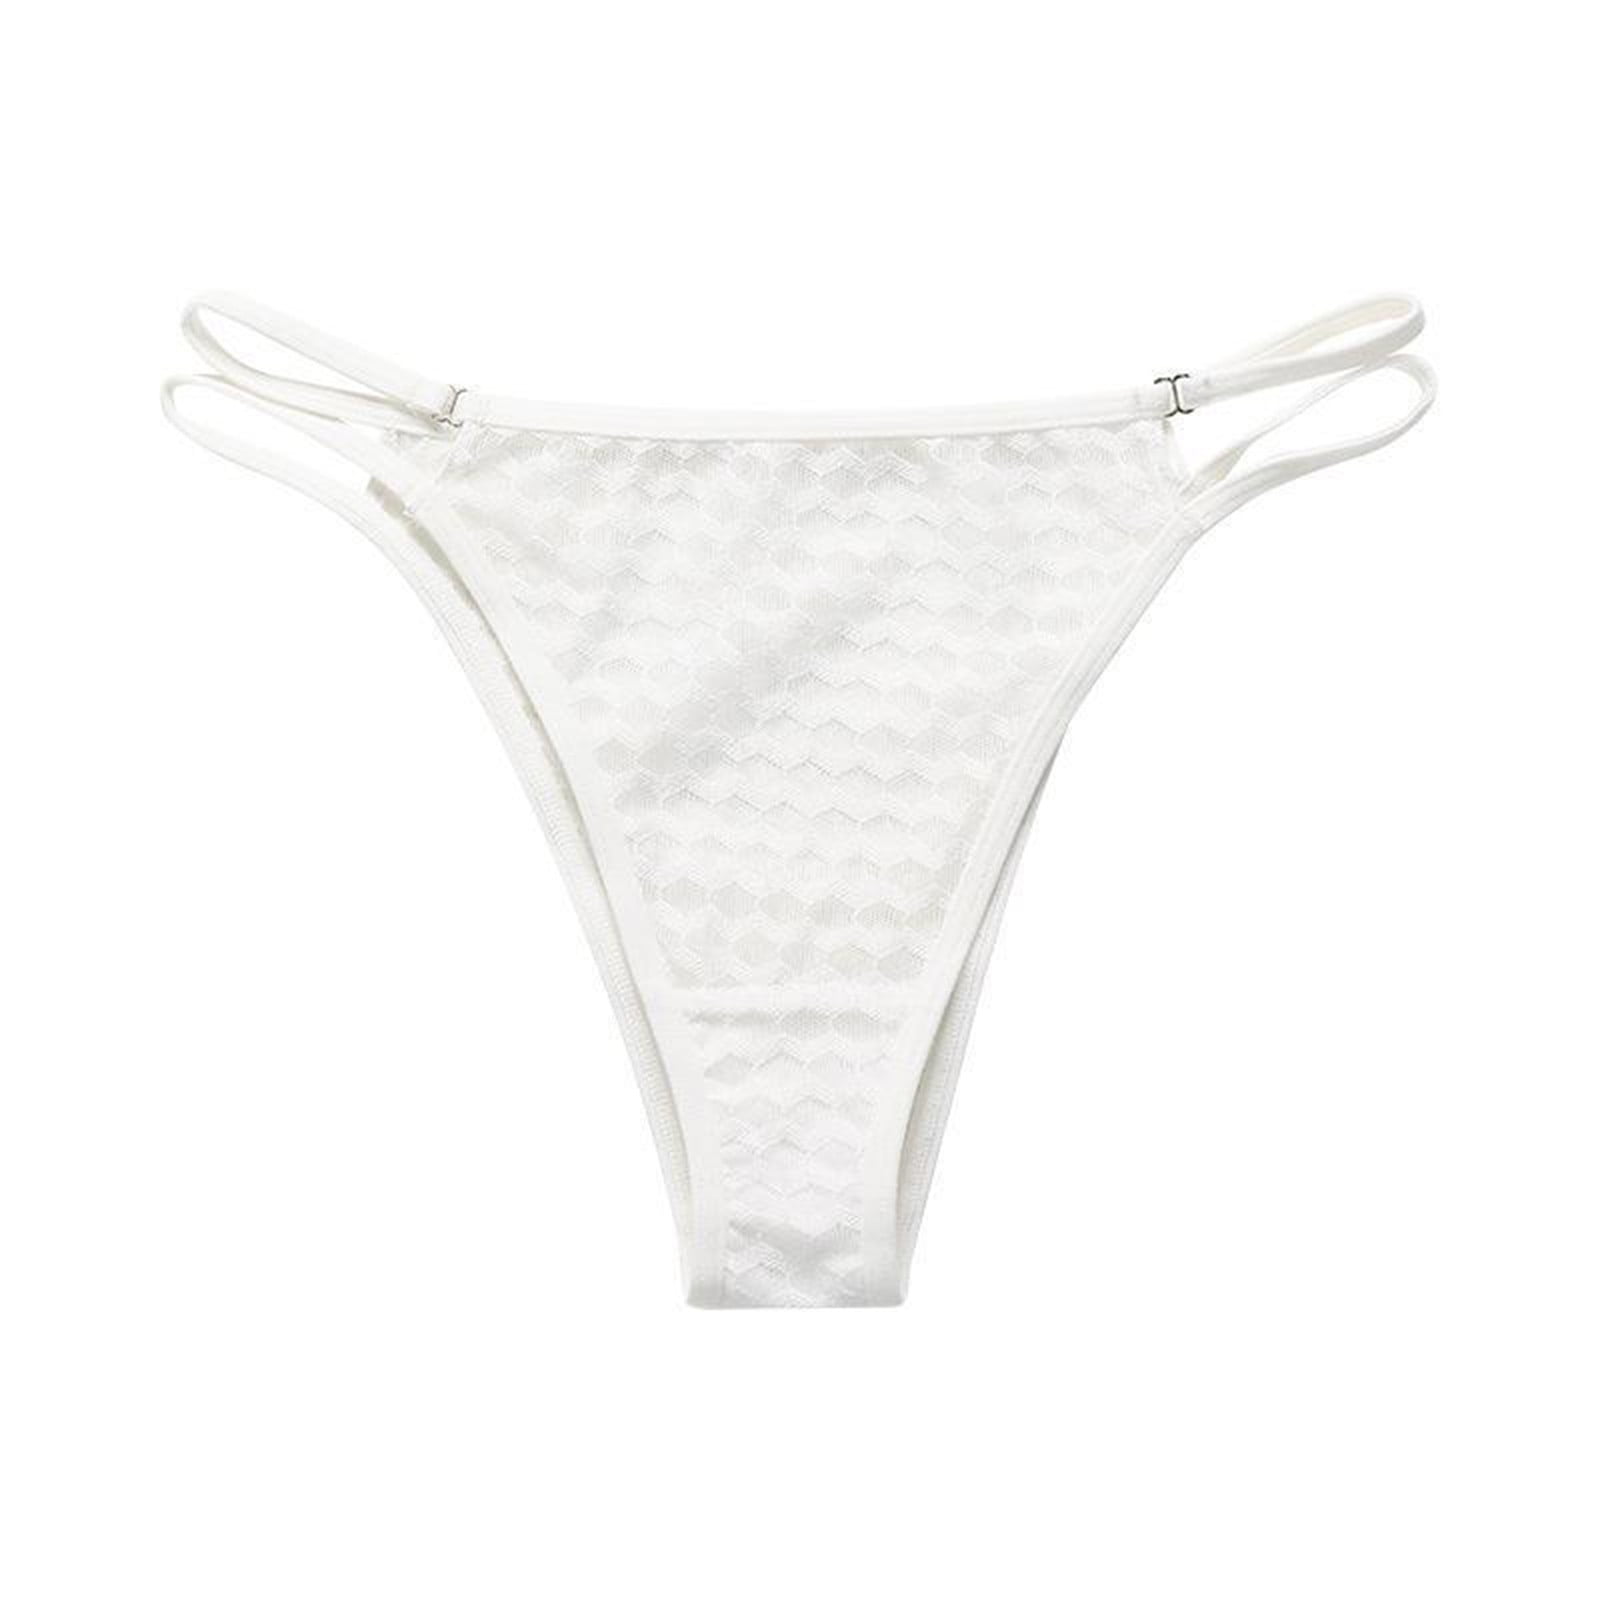 ZMHEGW Women's Silky Shiny Low Waist Briefs Transparent Underwear